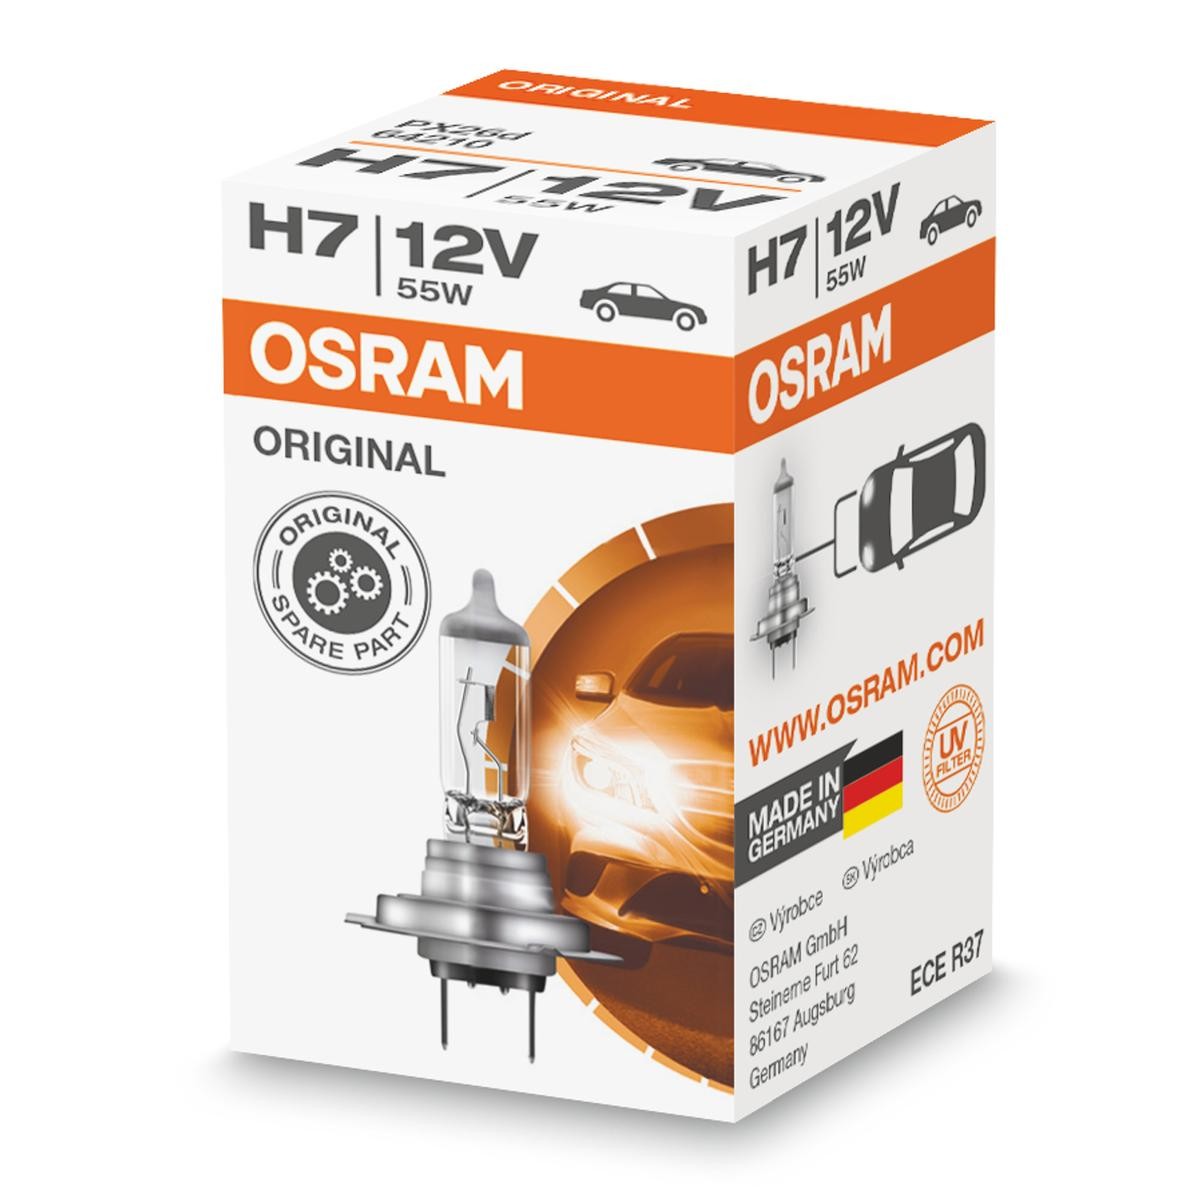 Kupte si OSRAM Zarovka, dalkovy svetlomet 64210L pro MITSUBISHI za přijatelnou cenu